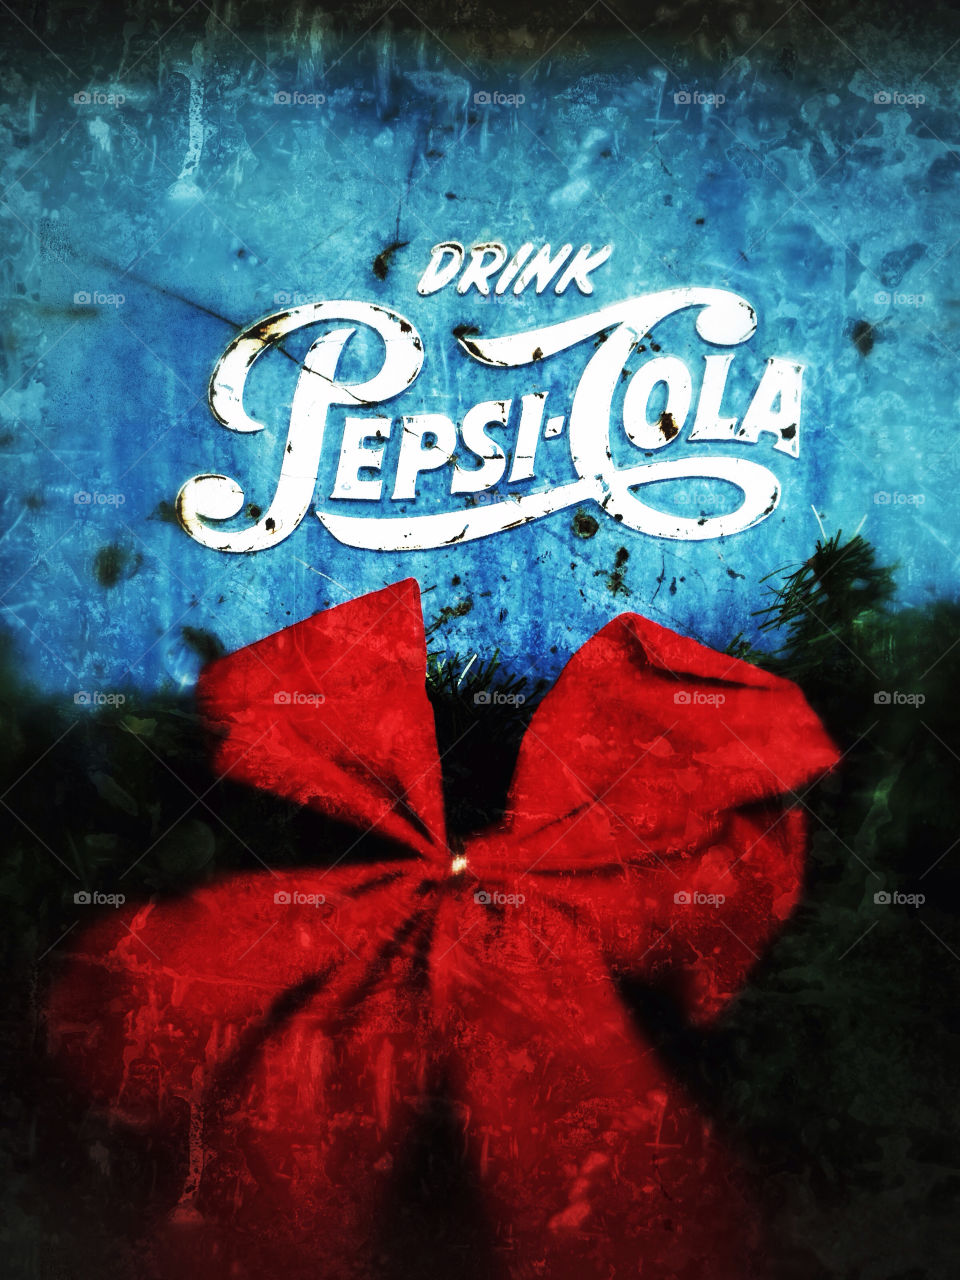 cartersville ga pepsi cola soda drink advertising vintage antique by sdvaugh